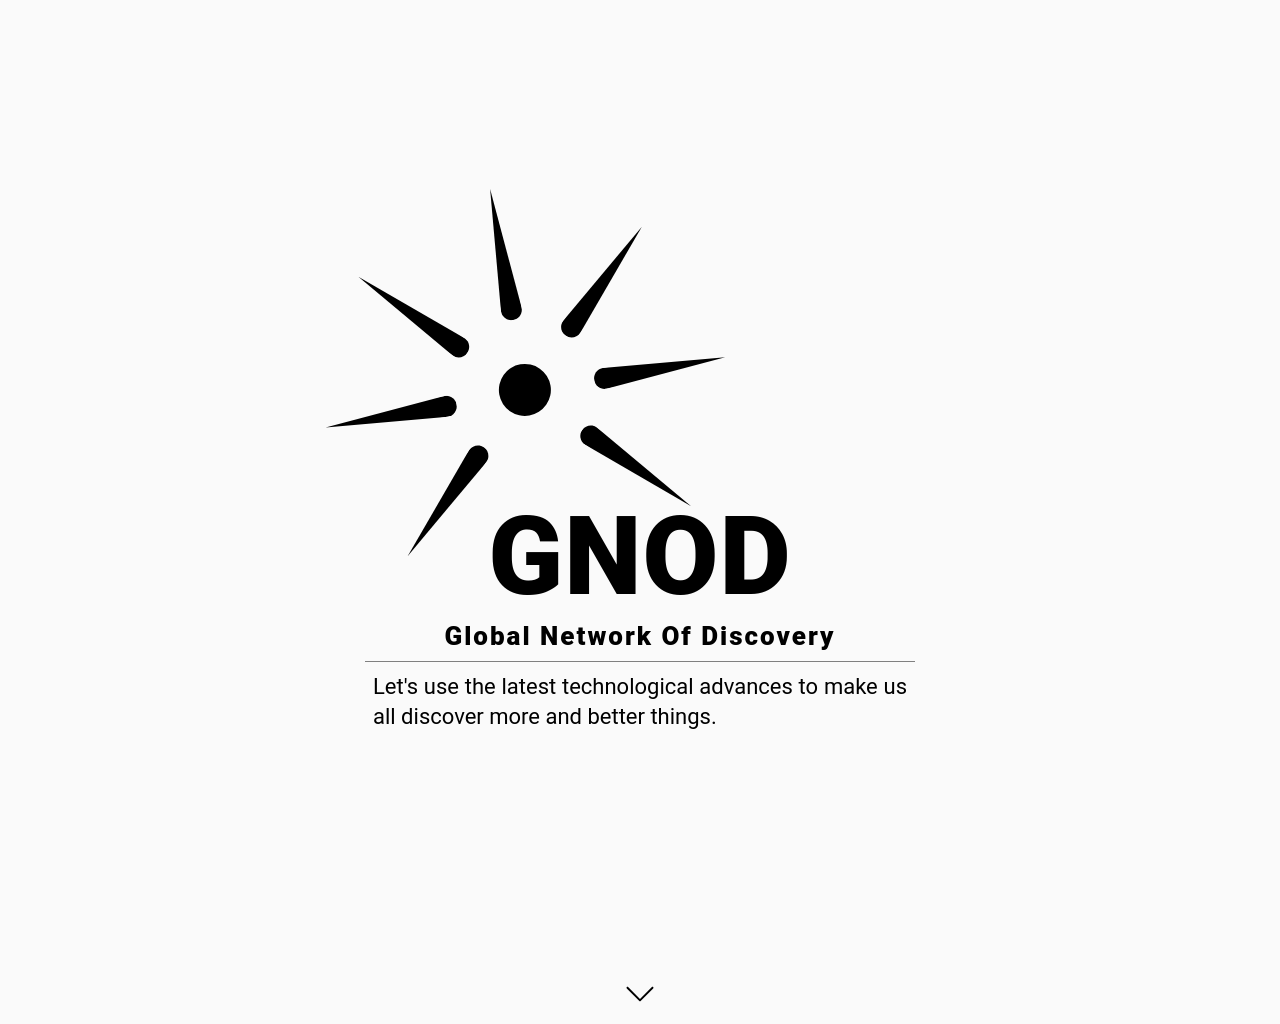 gnod.net